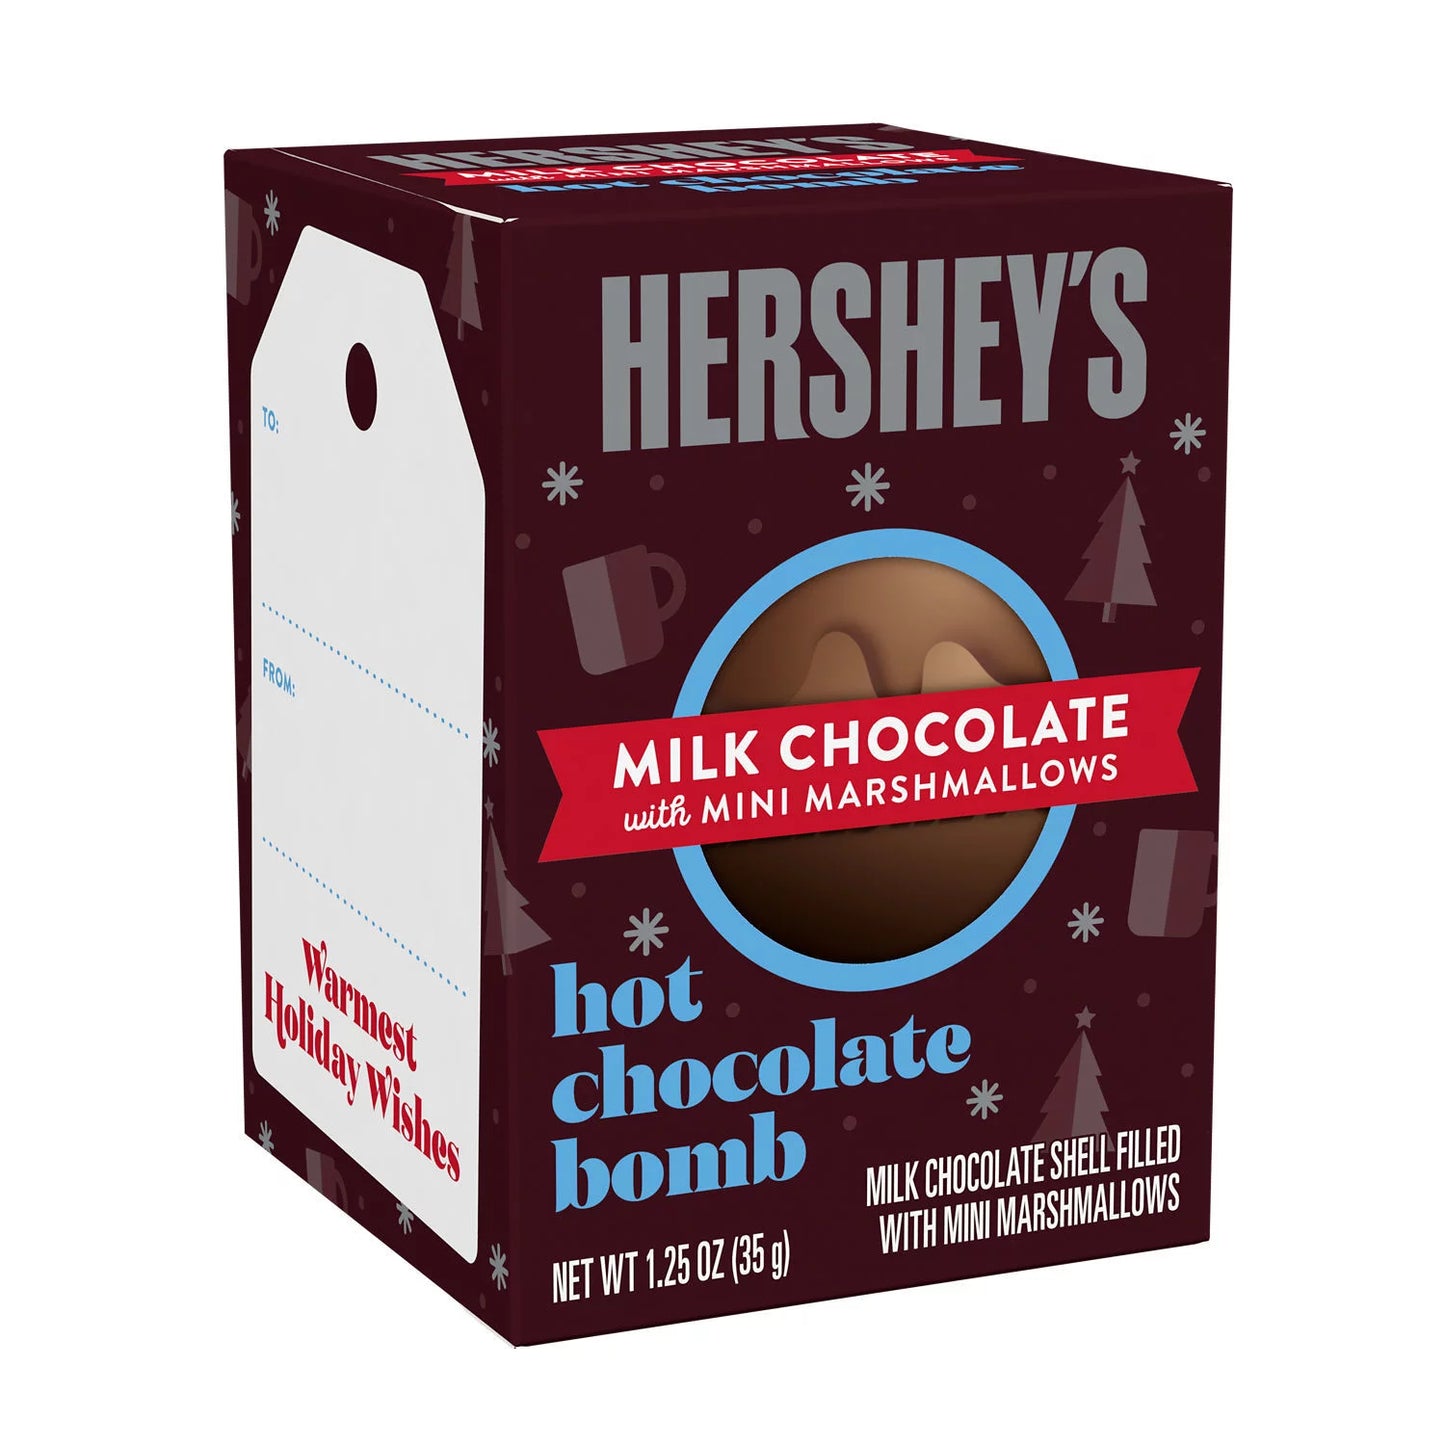 HERSHEY'S, Milk Chocolate with Mini Marshmallows Hot Chocolate Bomb, Christmas Candy, 1.25 oz, Gift Box